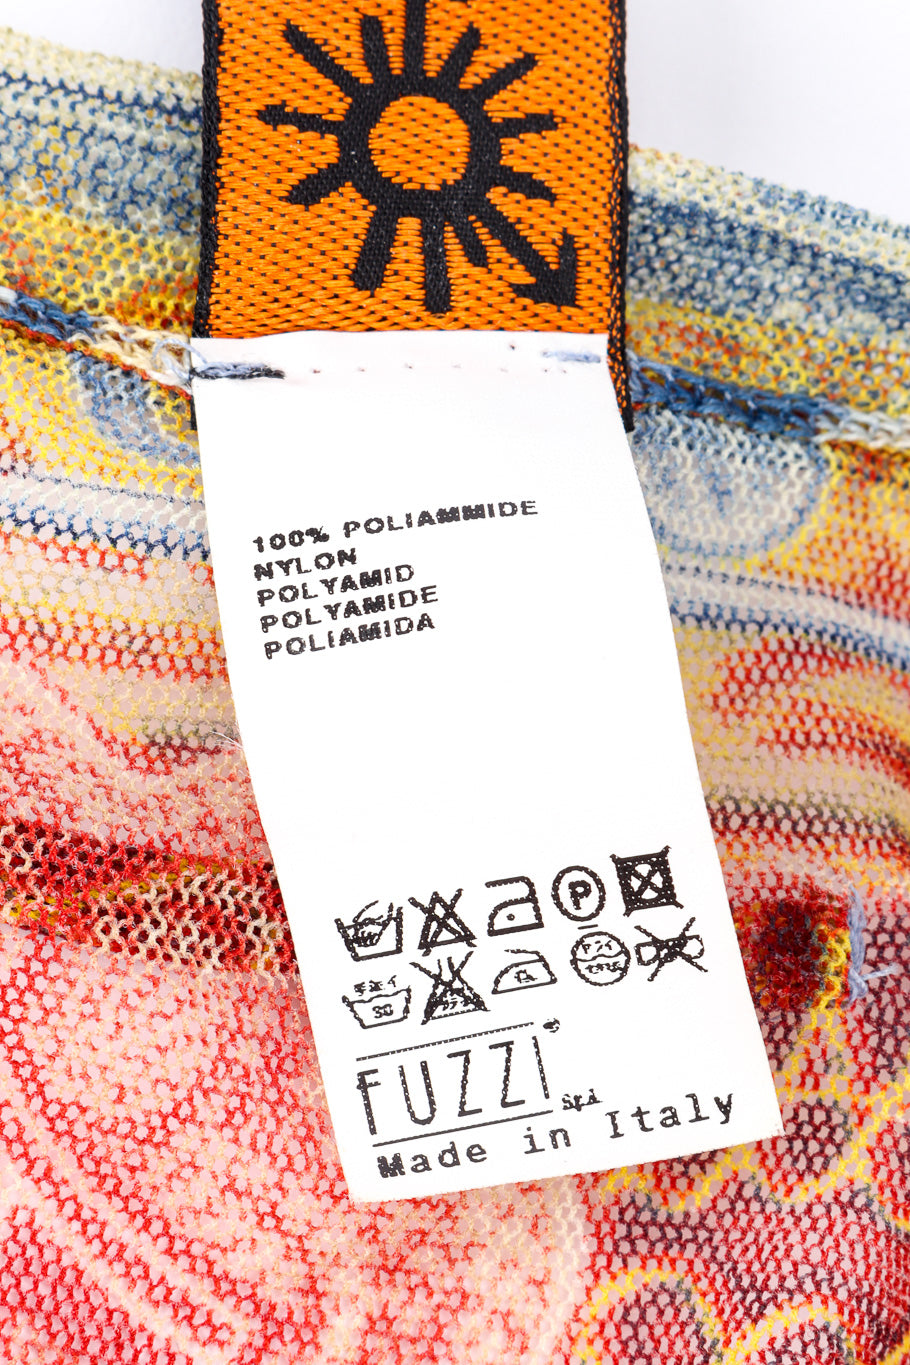 Vintage Jean Paul Gaultier Currency Mesh Wrap Top fabric content label closeup @Recessla